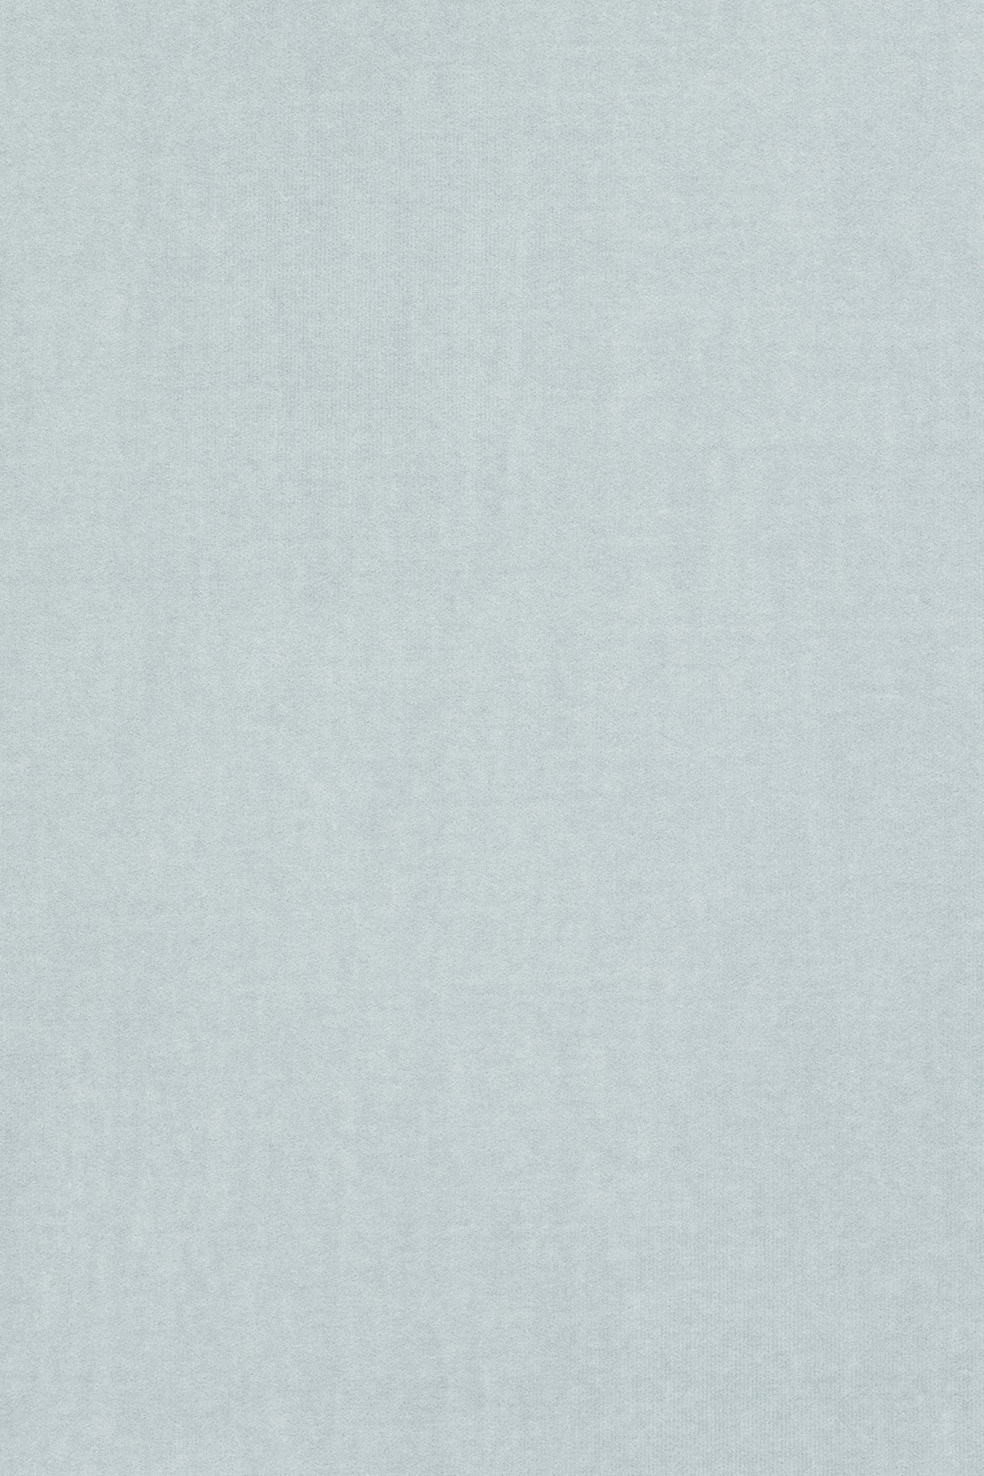 Fabric sample Harald 3 823 grey